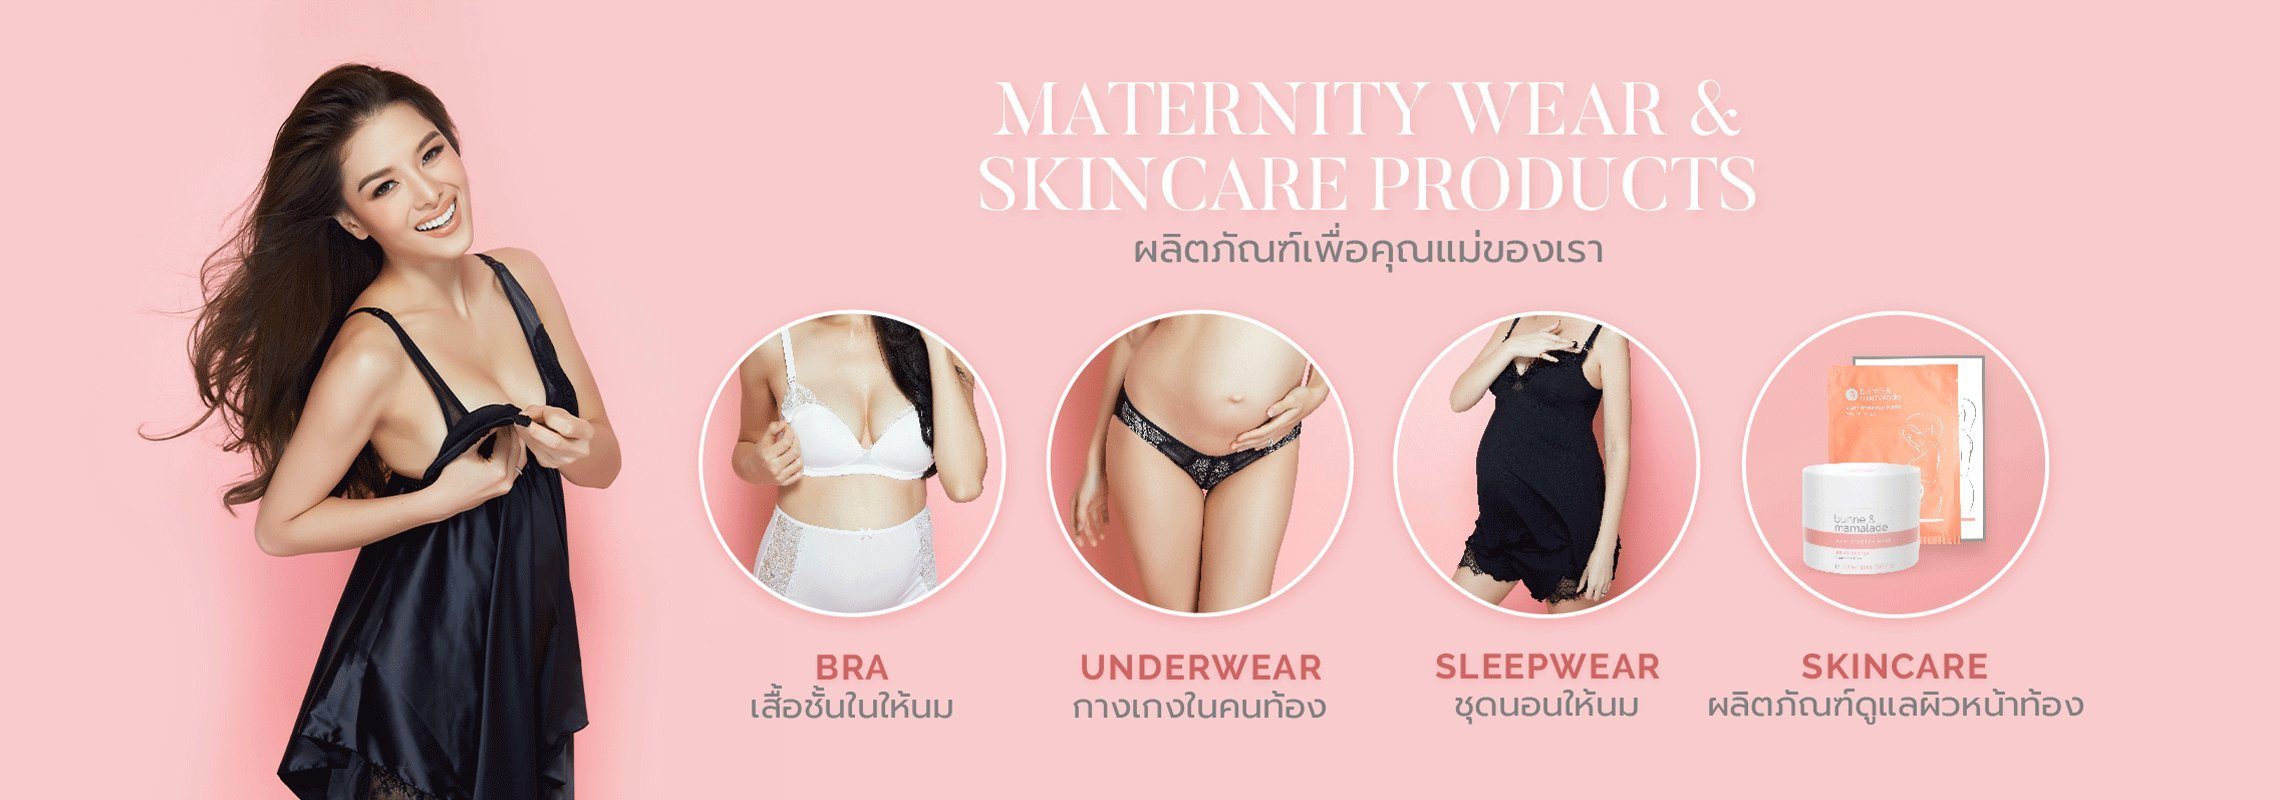 Pregnancy Bra, Maternity Underwear, Nursing Sleepwear, and